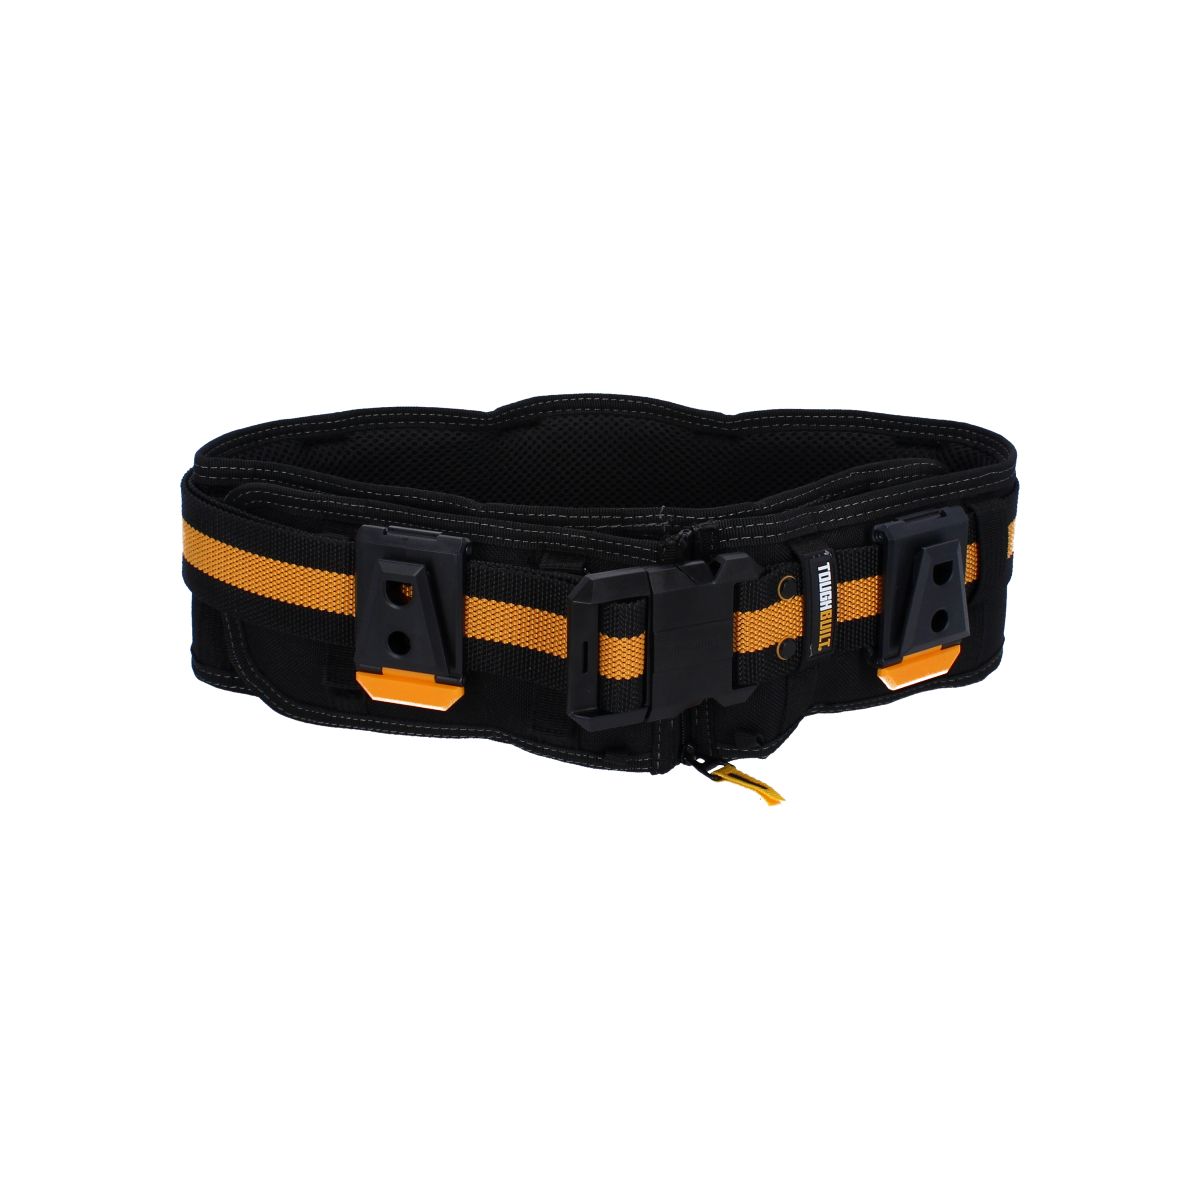 ⇒ Cinturon porta herramientas toughbuilt mantenimiento set 3